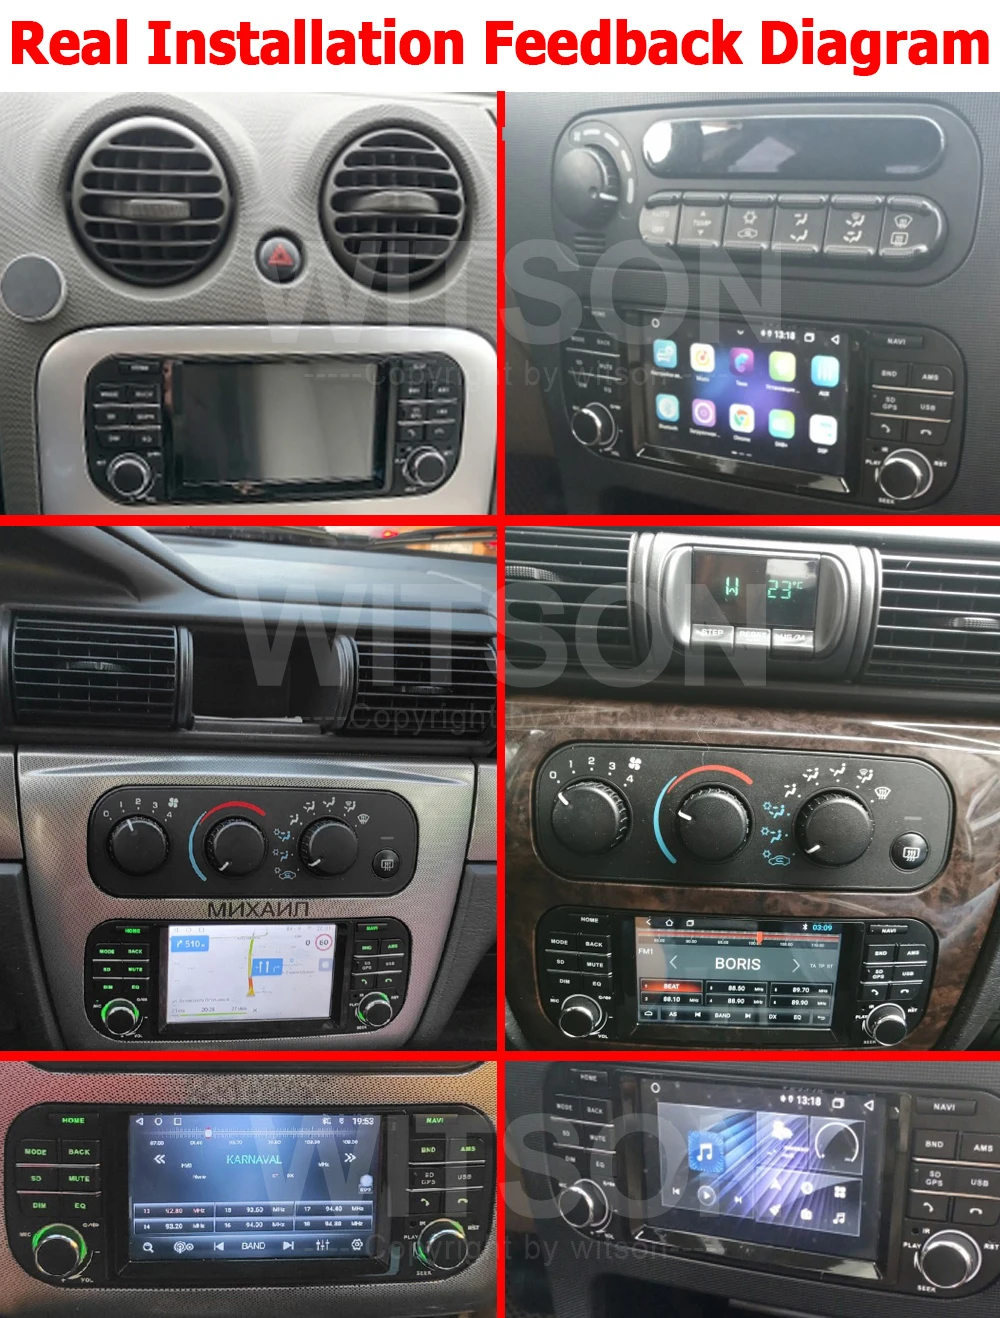 Автомобильный Радиоприемник Multimidia Player Android Auto GPS WIFI Для 300M Stratus Седан PT Cruiser Durango Grand Cherokee DSP CarPlay Стерео